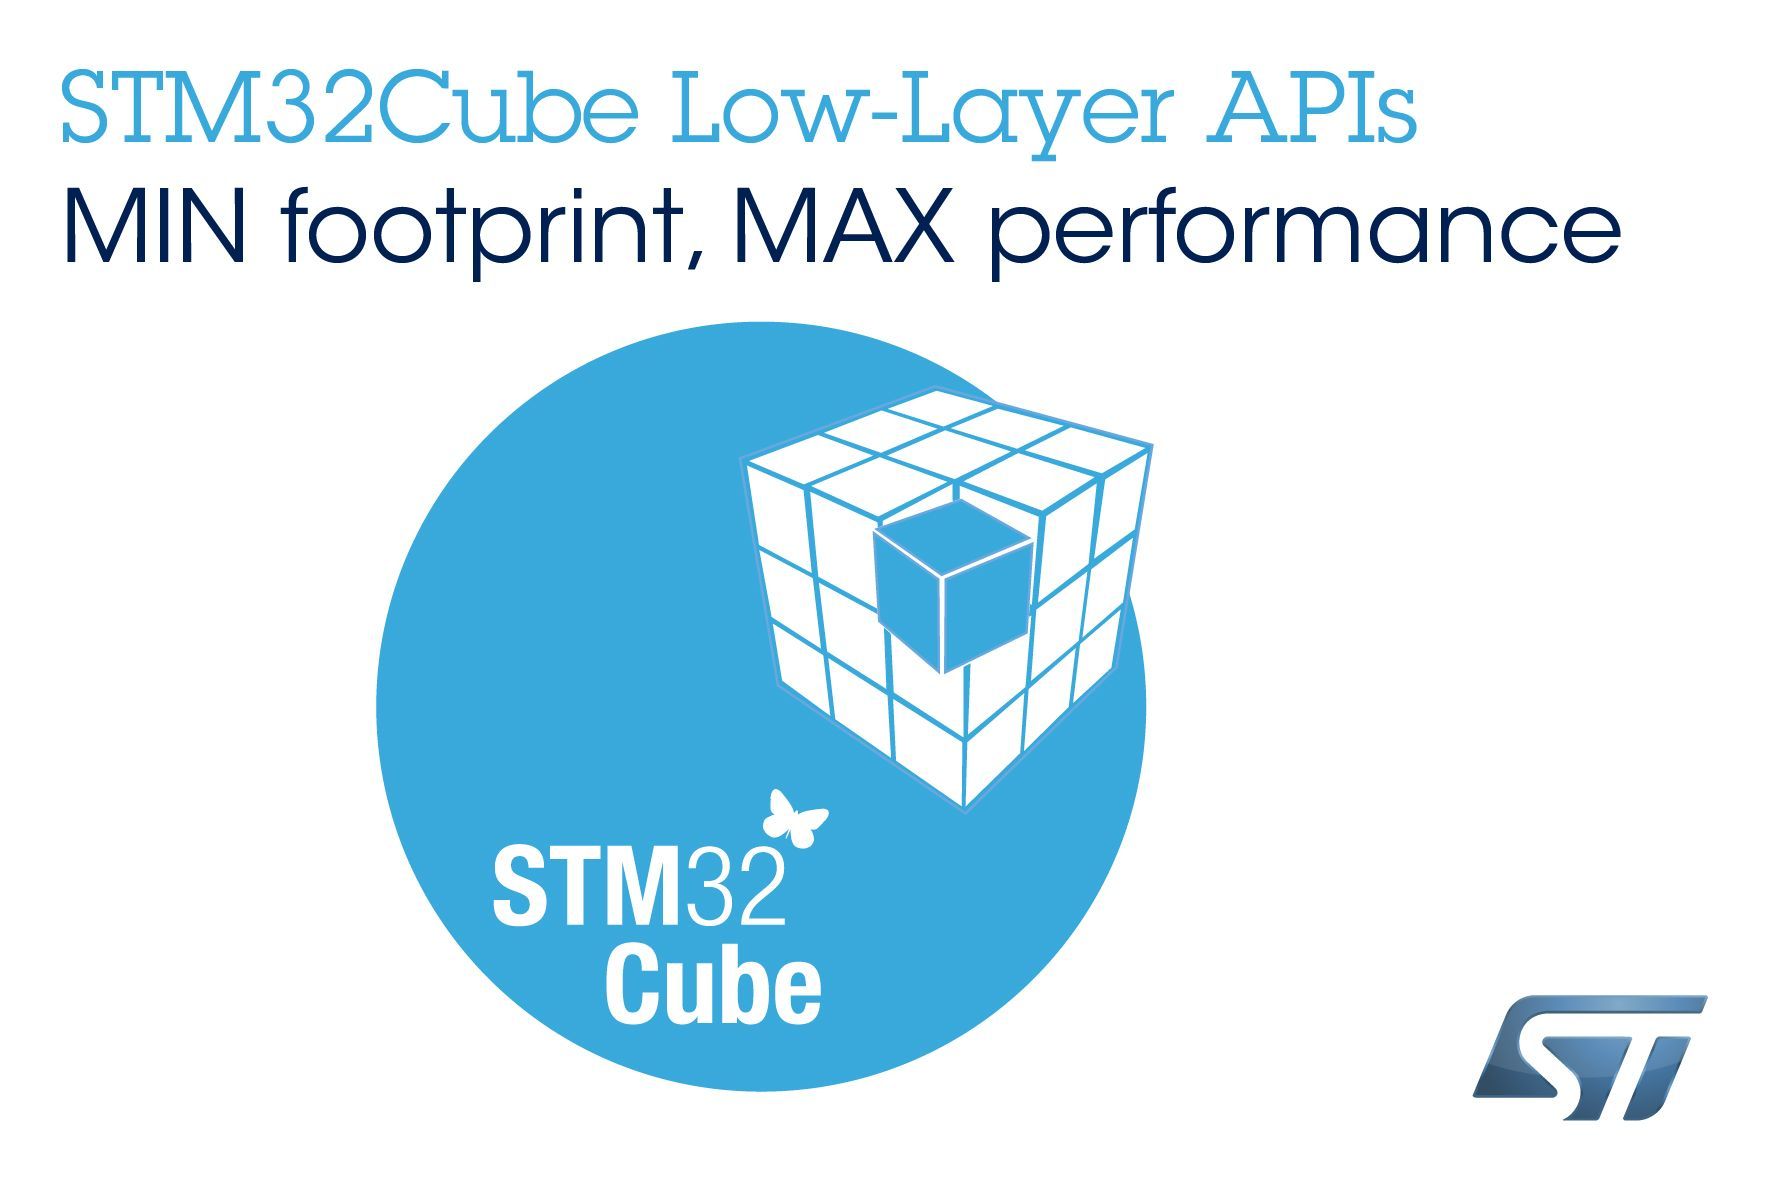 Stm cube. Stm32 Cube. Stm32 логотип. Cube MX stm32. STMICROELECTRONICS logo.